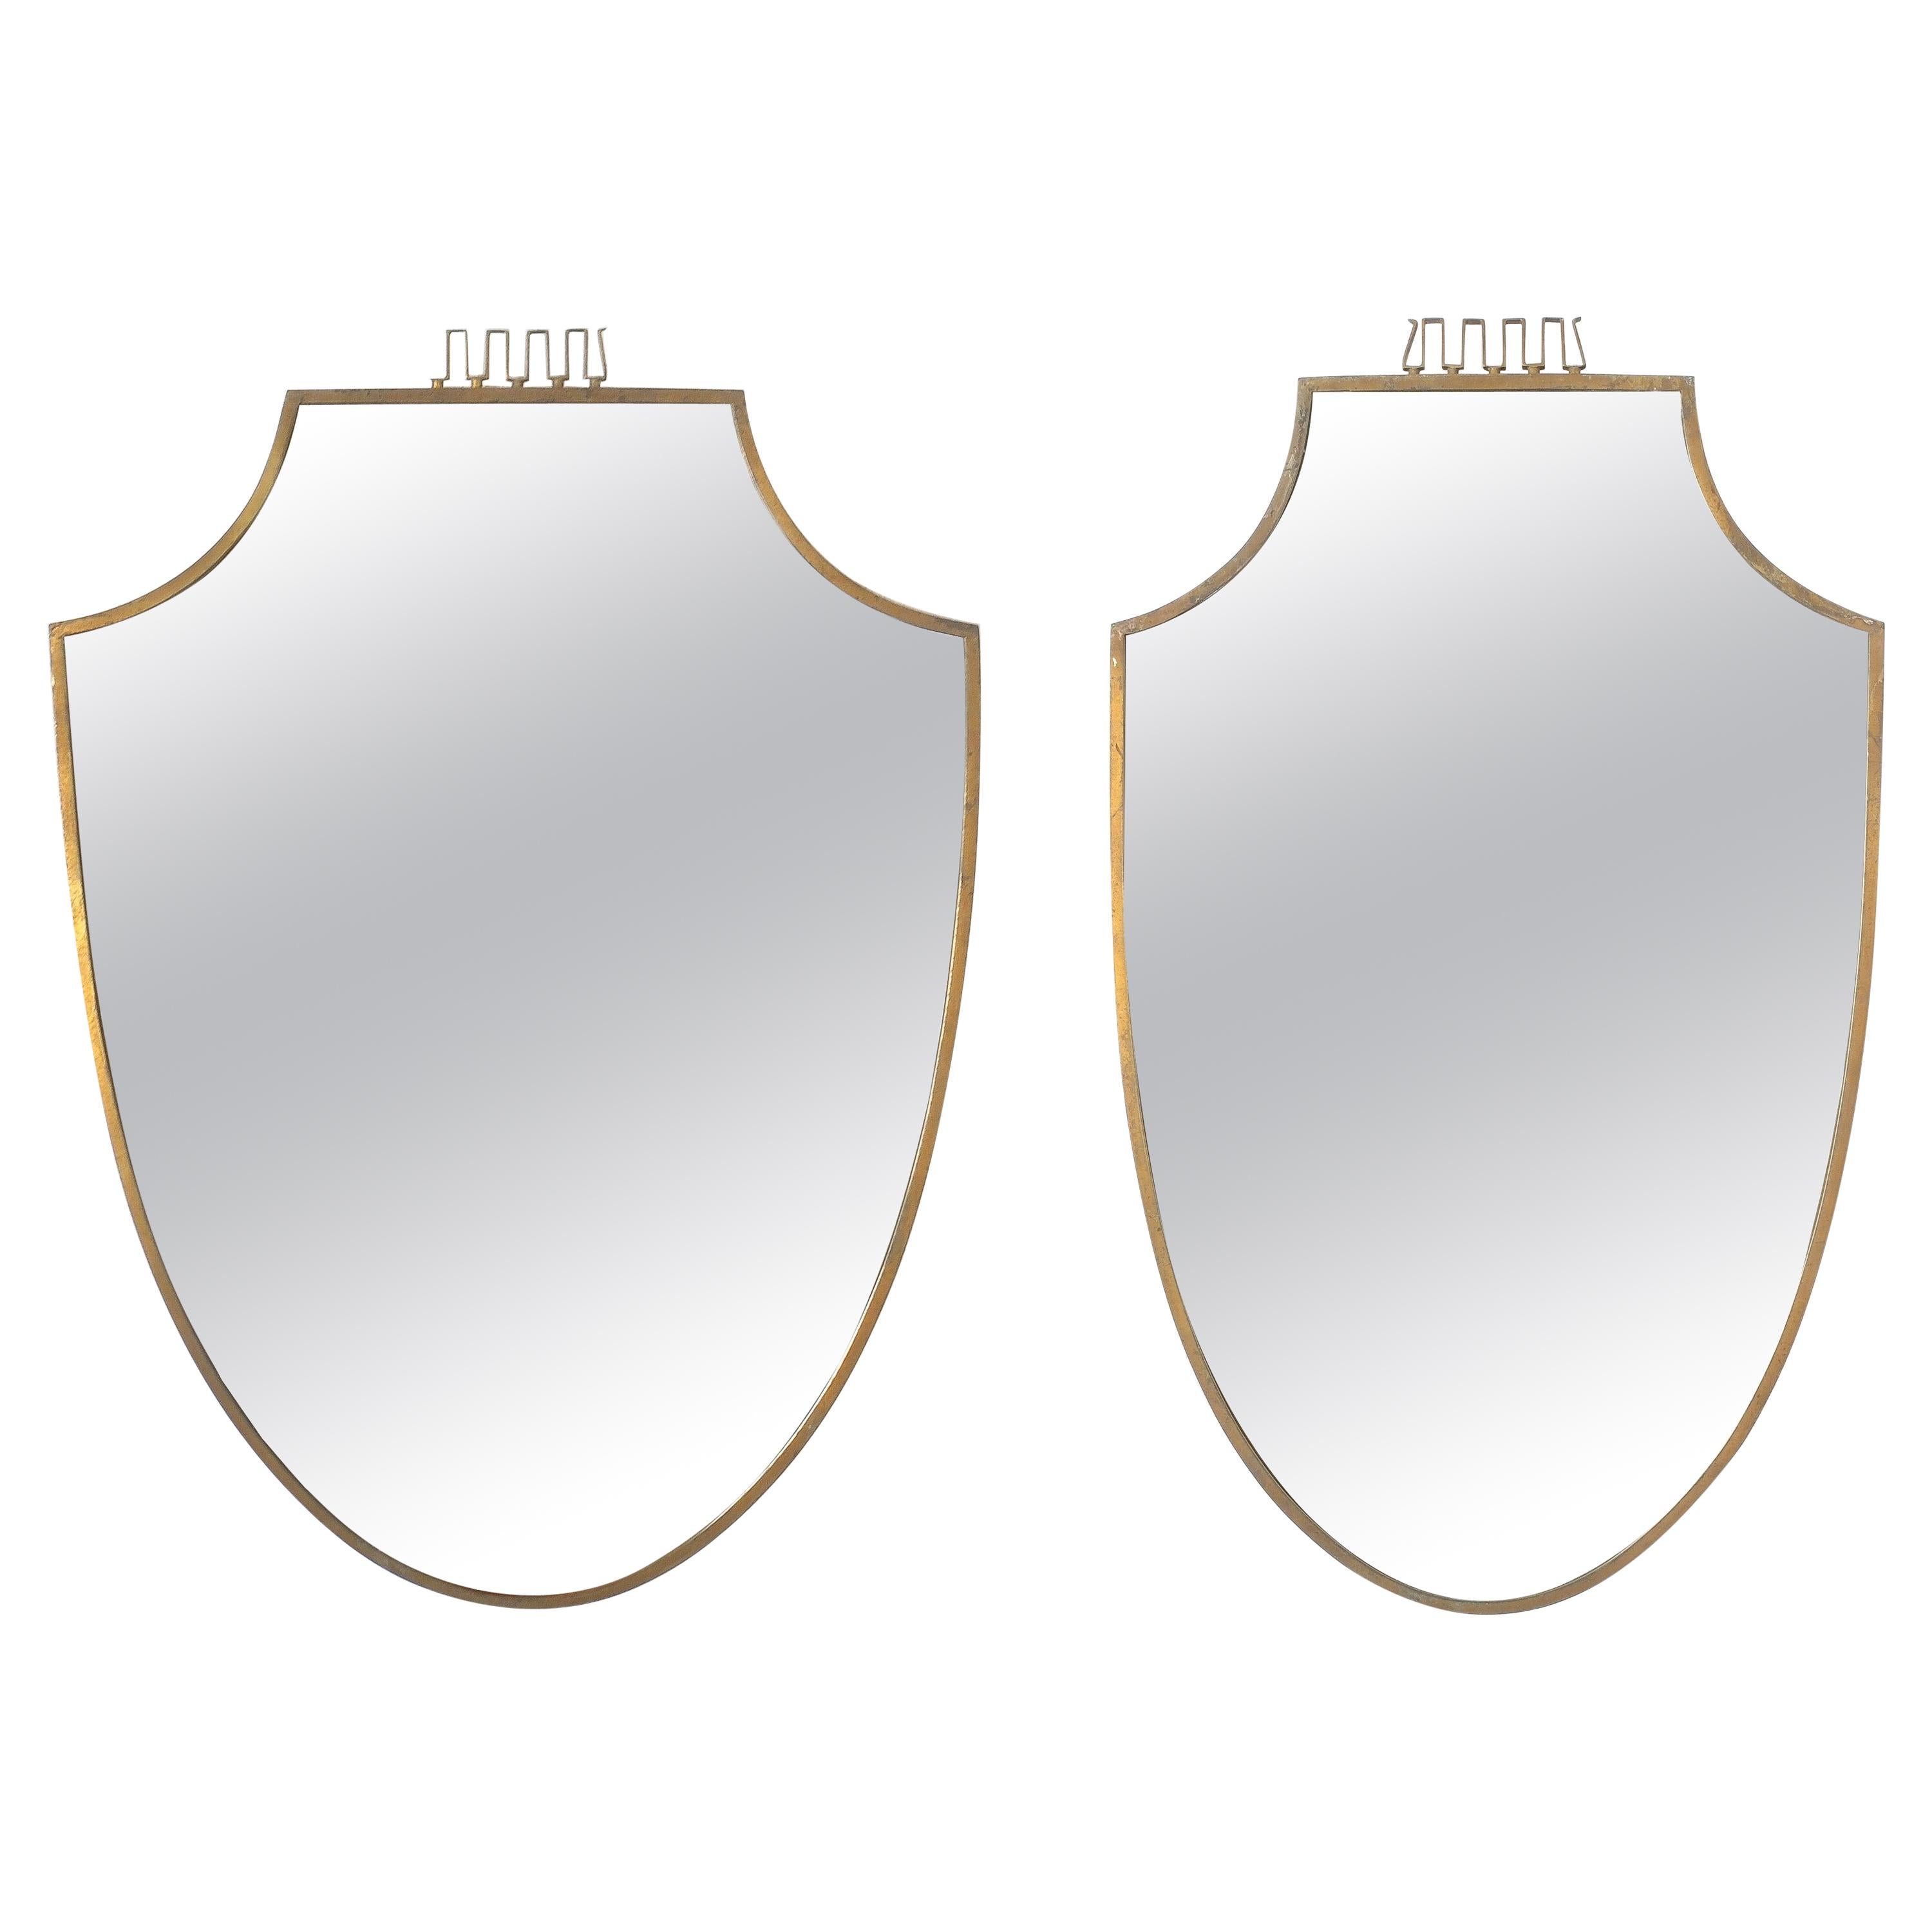 Pair of Brass Mirrors, Midcentury, Italy